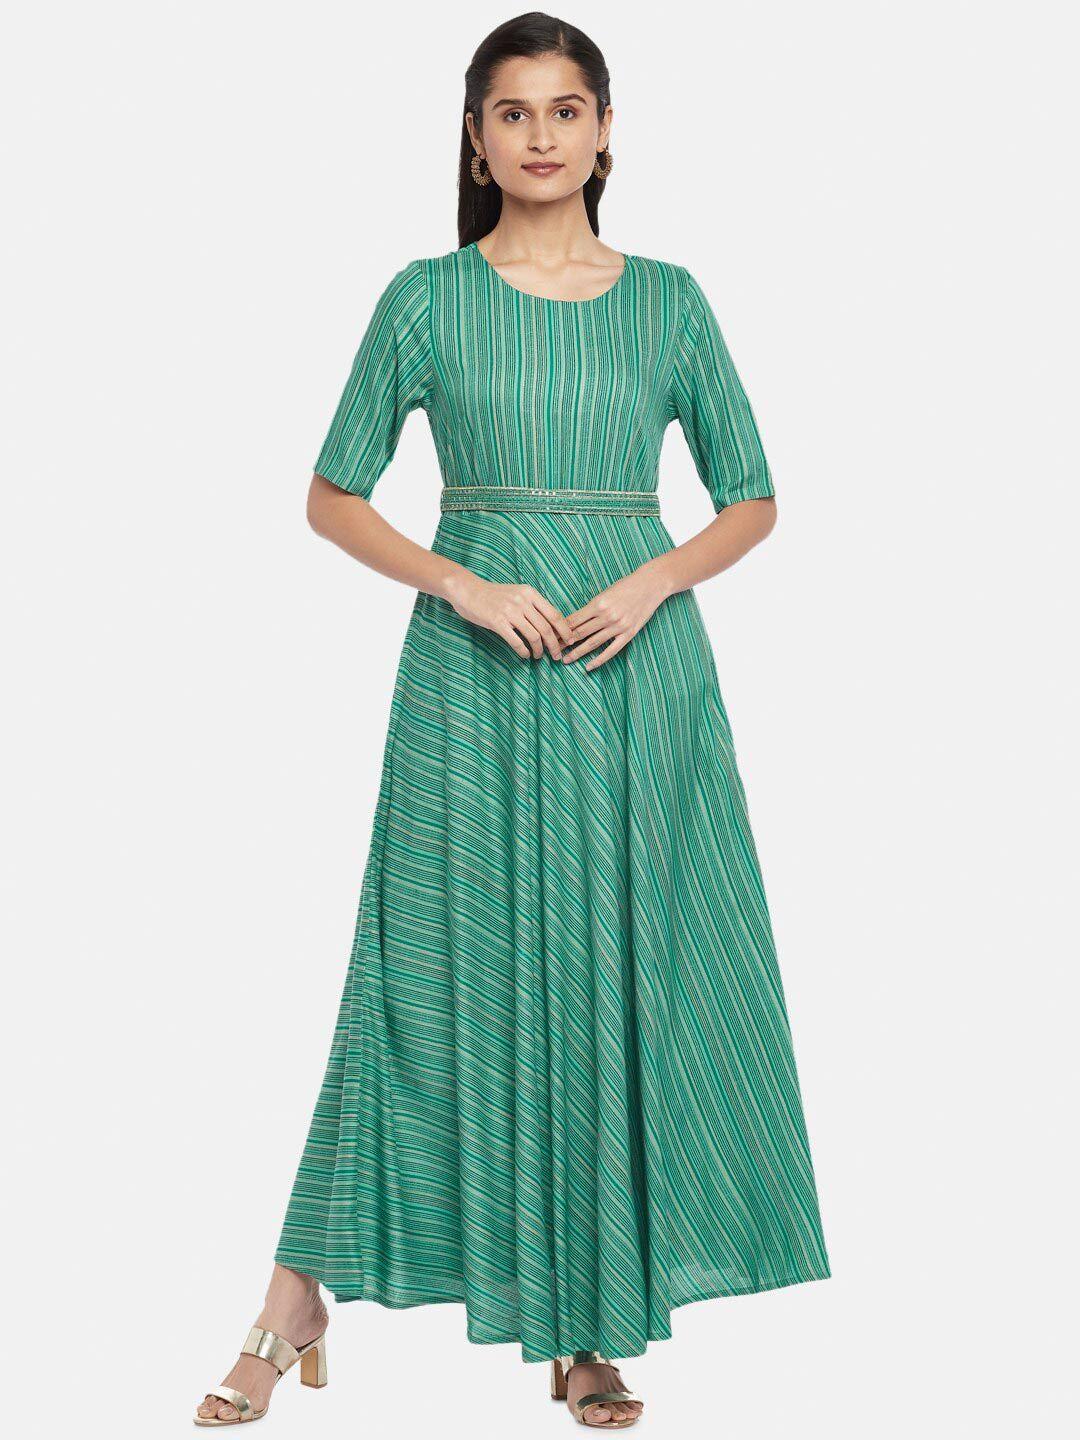 akkriti by pantaloons women green striped ethnic maxi dress